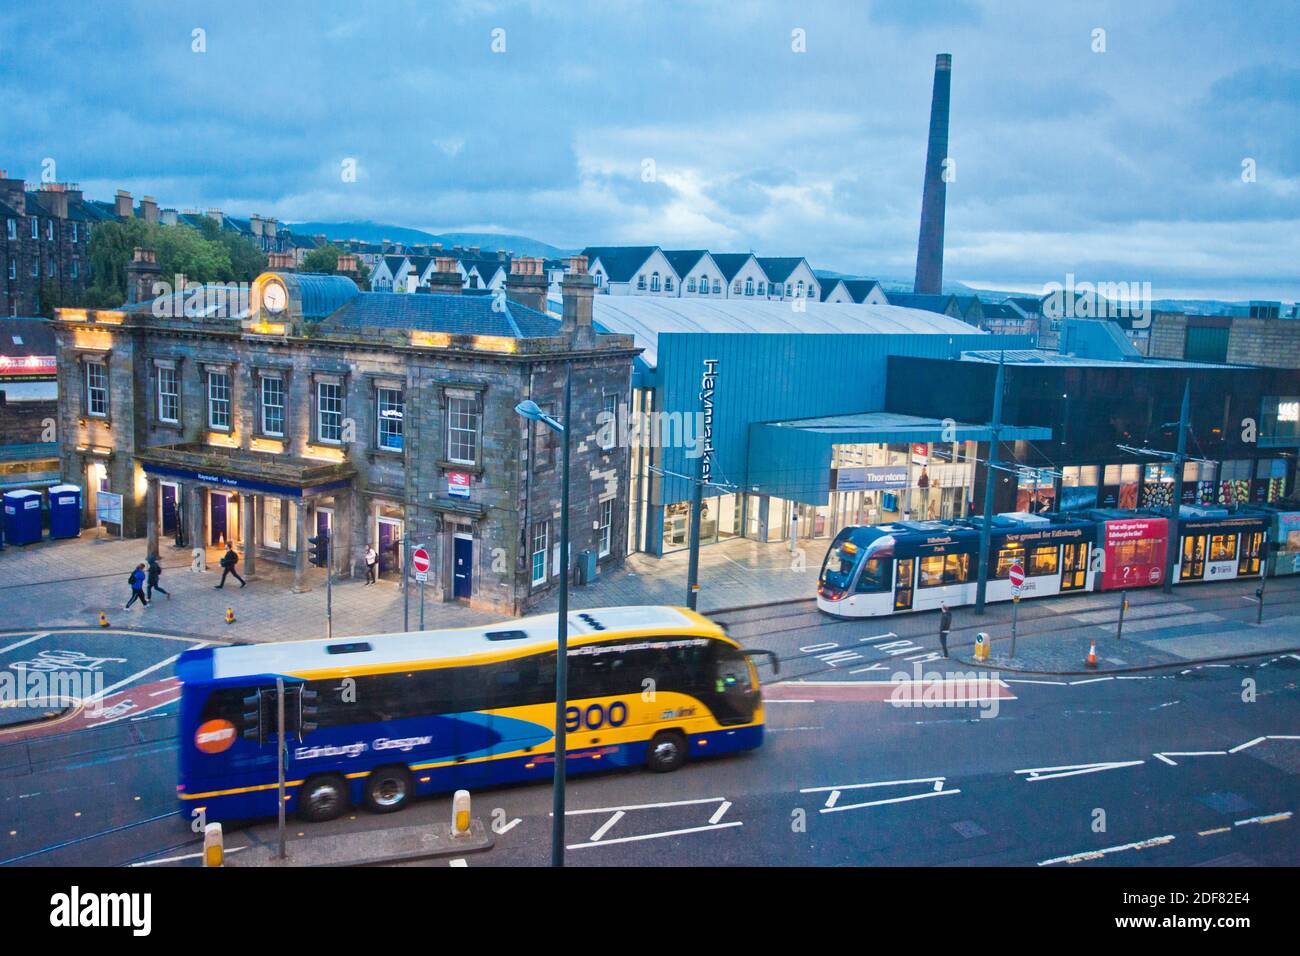 Haymarket railway station, train station, Old town, Edinburgh, Scotland, United Kingdom, Europe. Stock Photo